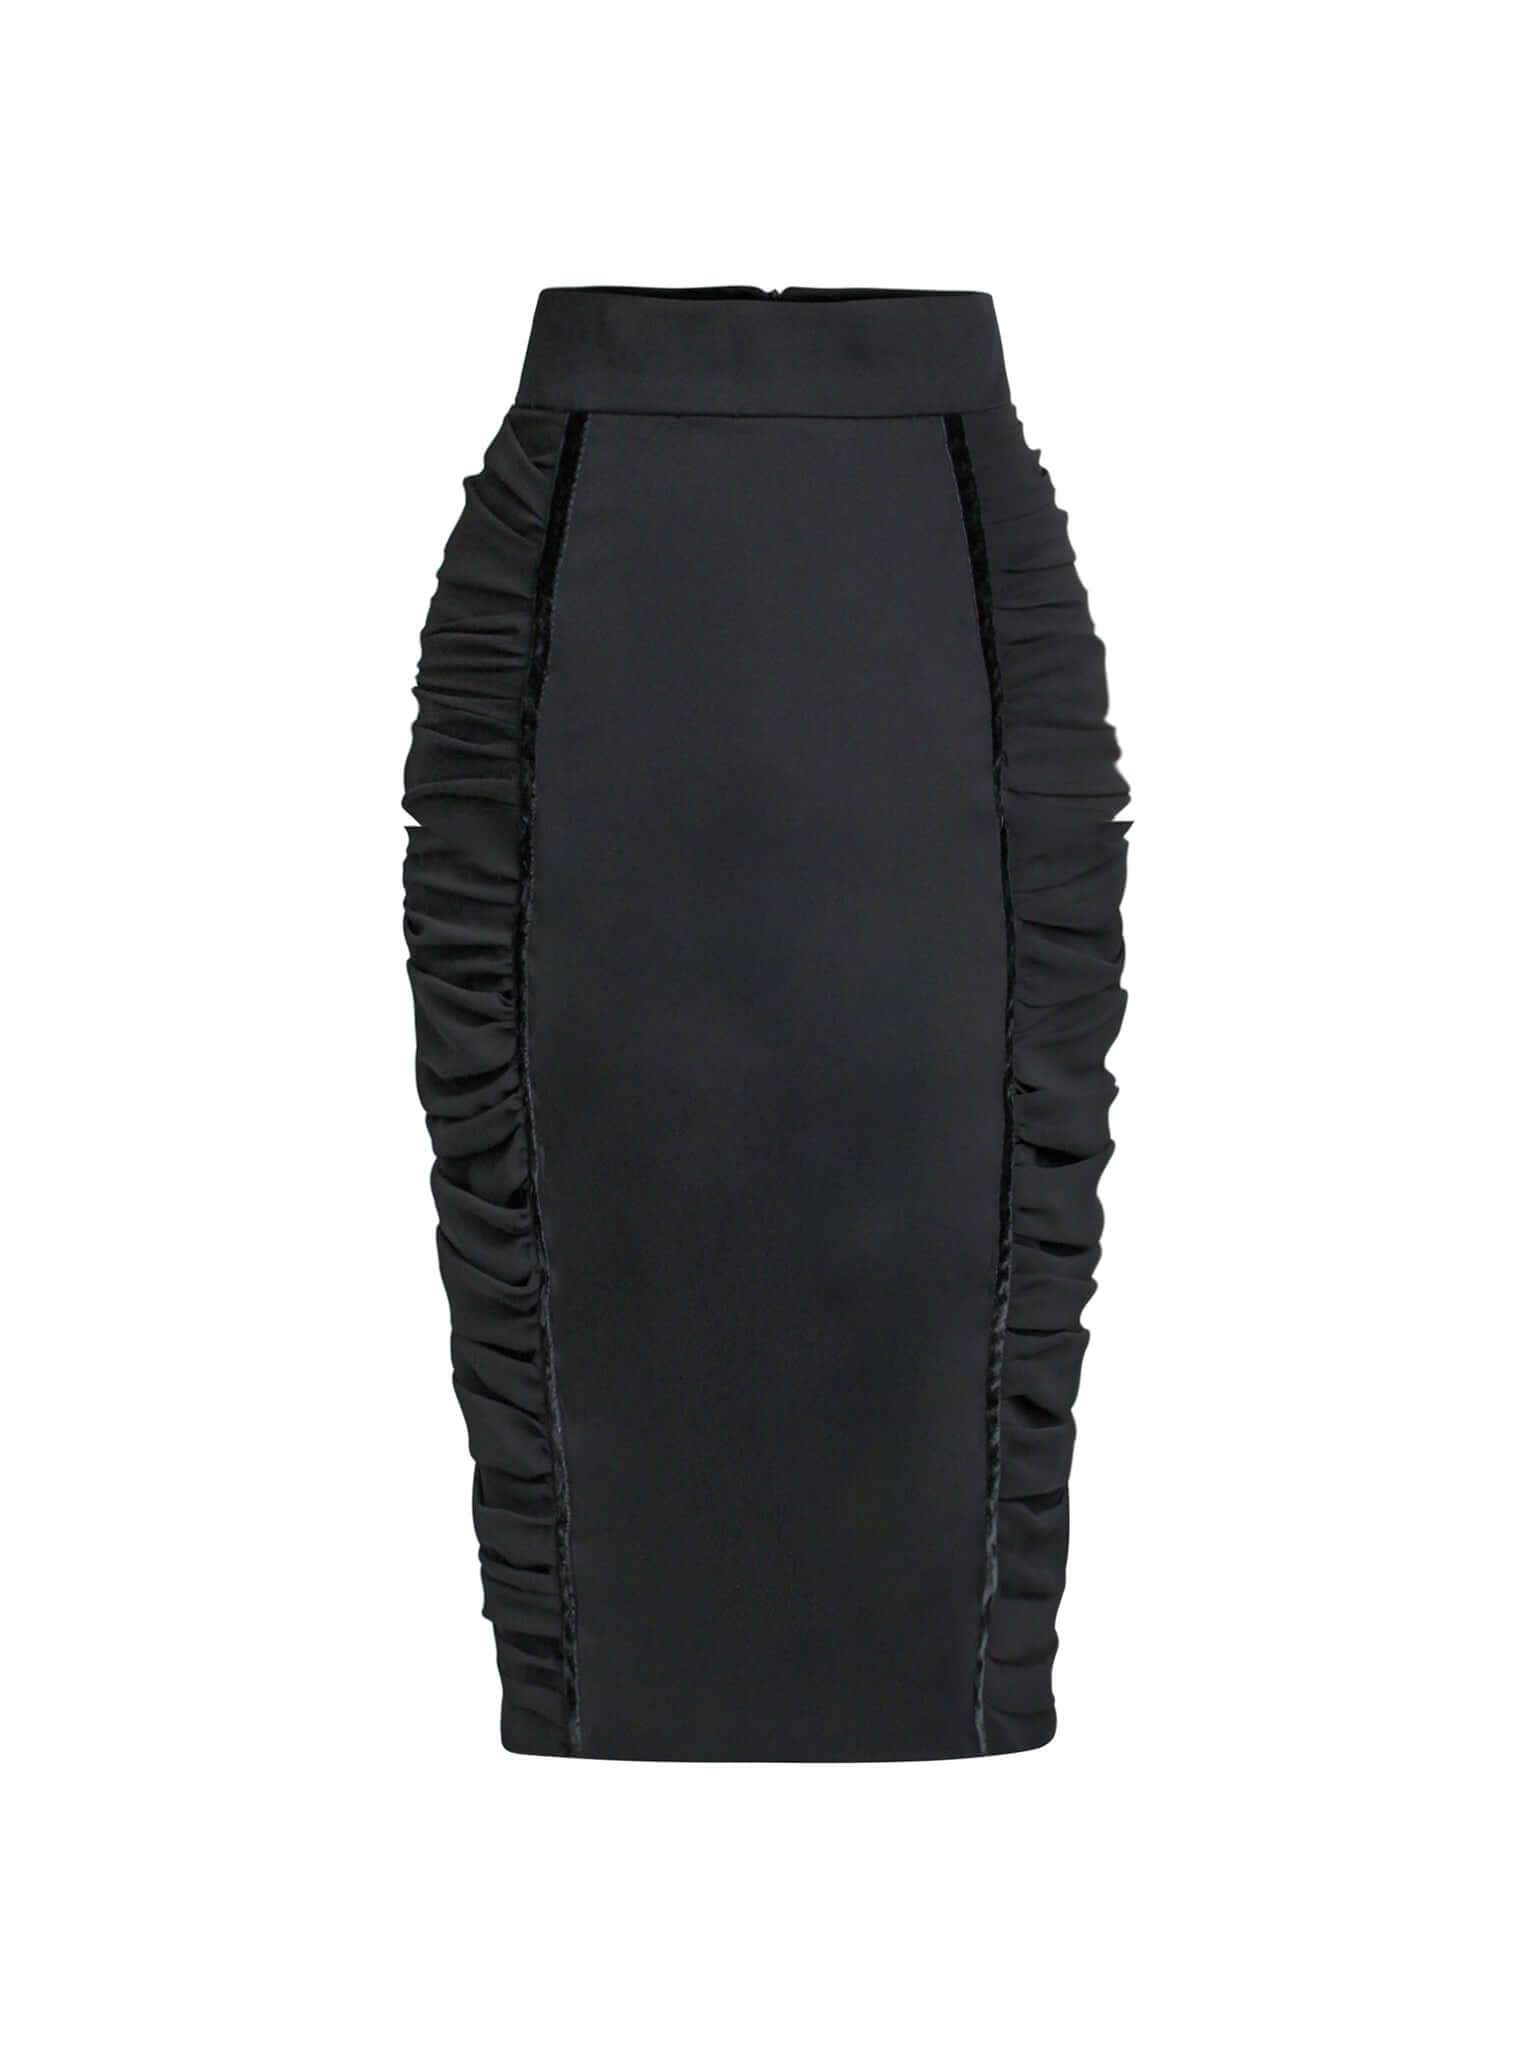 Centre Stage Bodycon Midi Skirt - Black by Tia Dorraine Women's Luxury Fashion Designer Clothing Brand